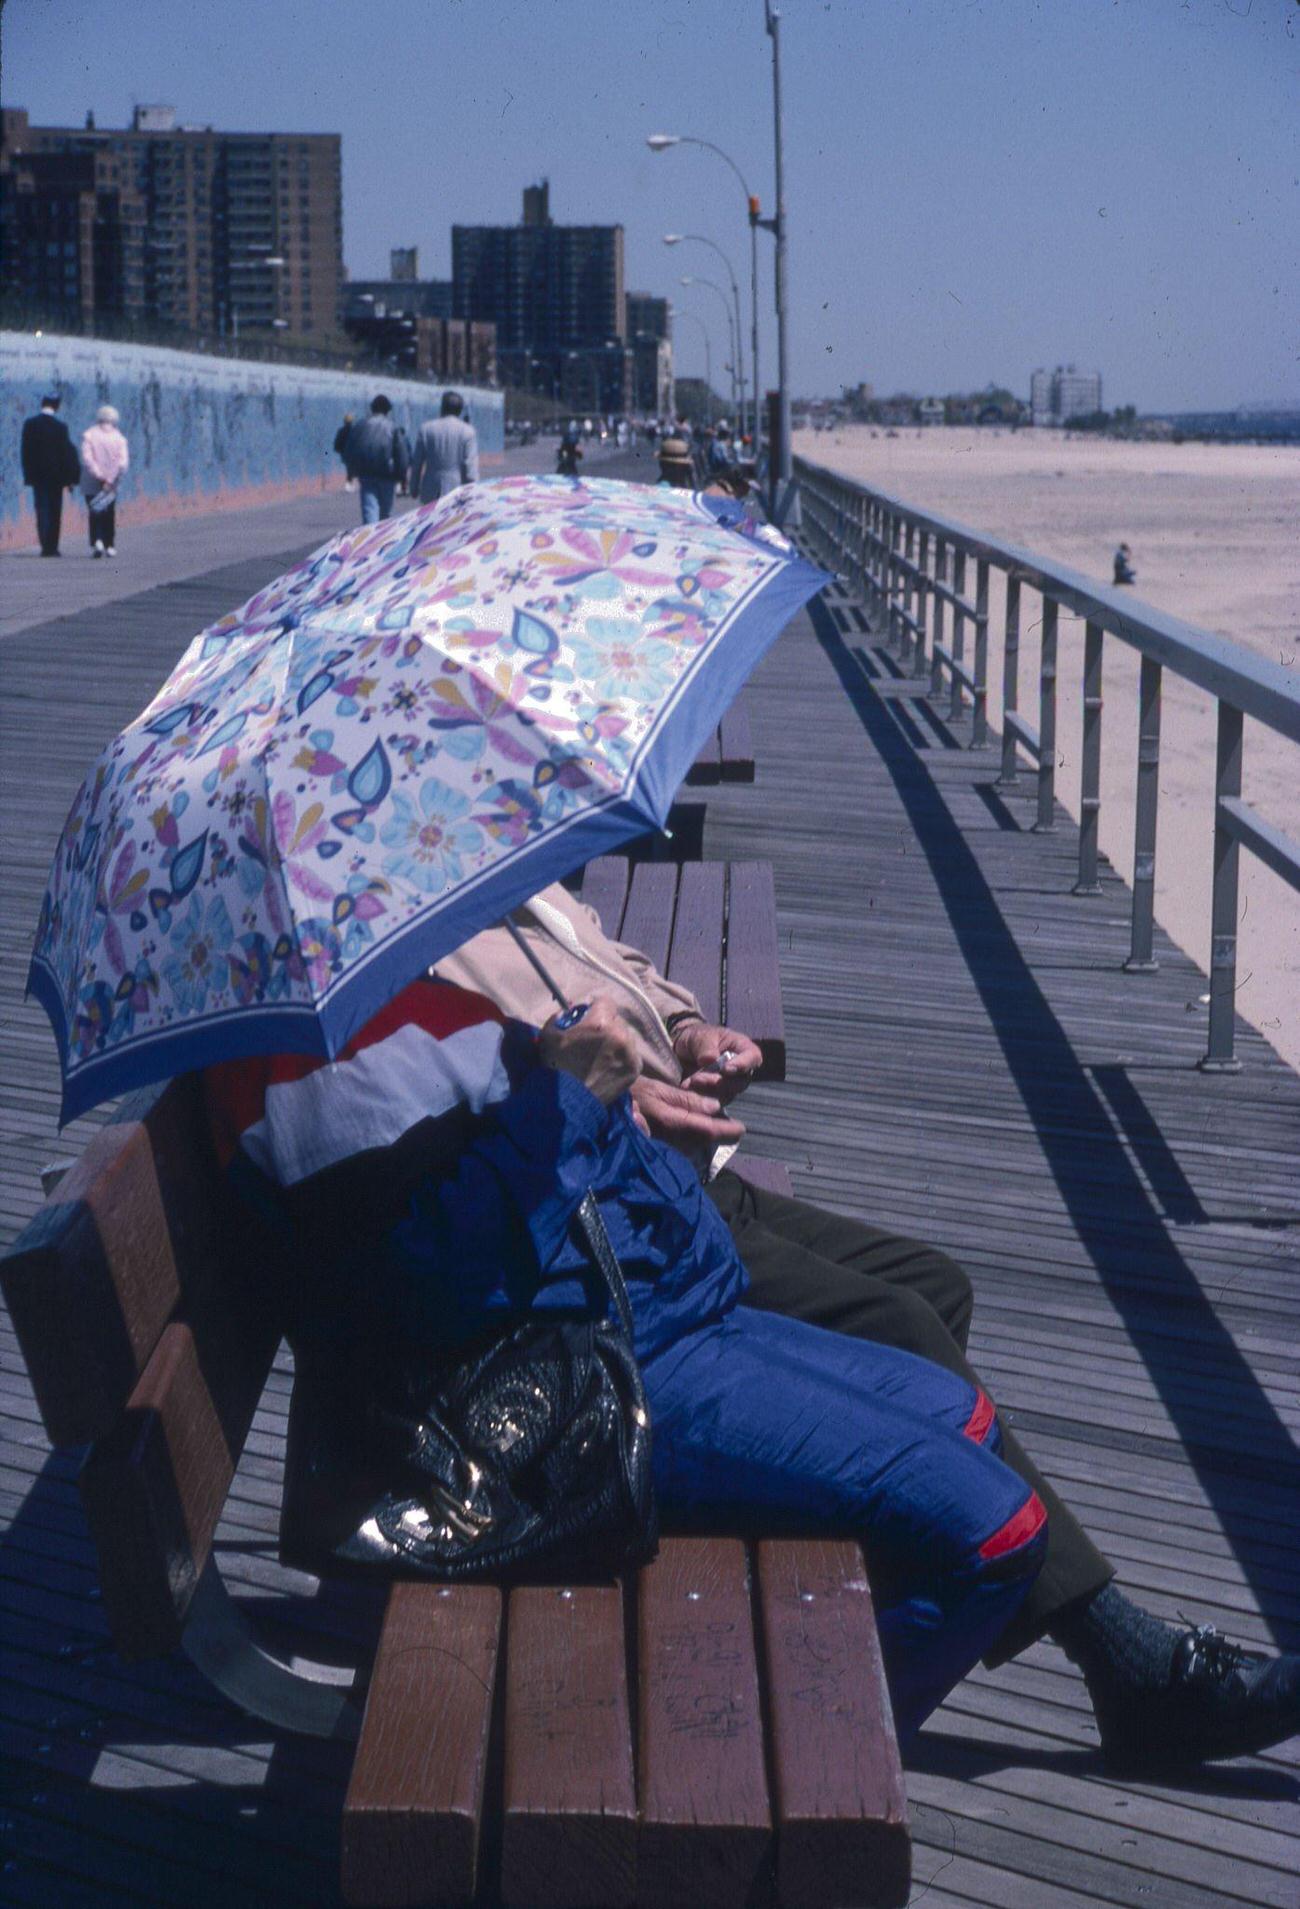 Couple On The Coney Island Boardwalk, October 1991